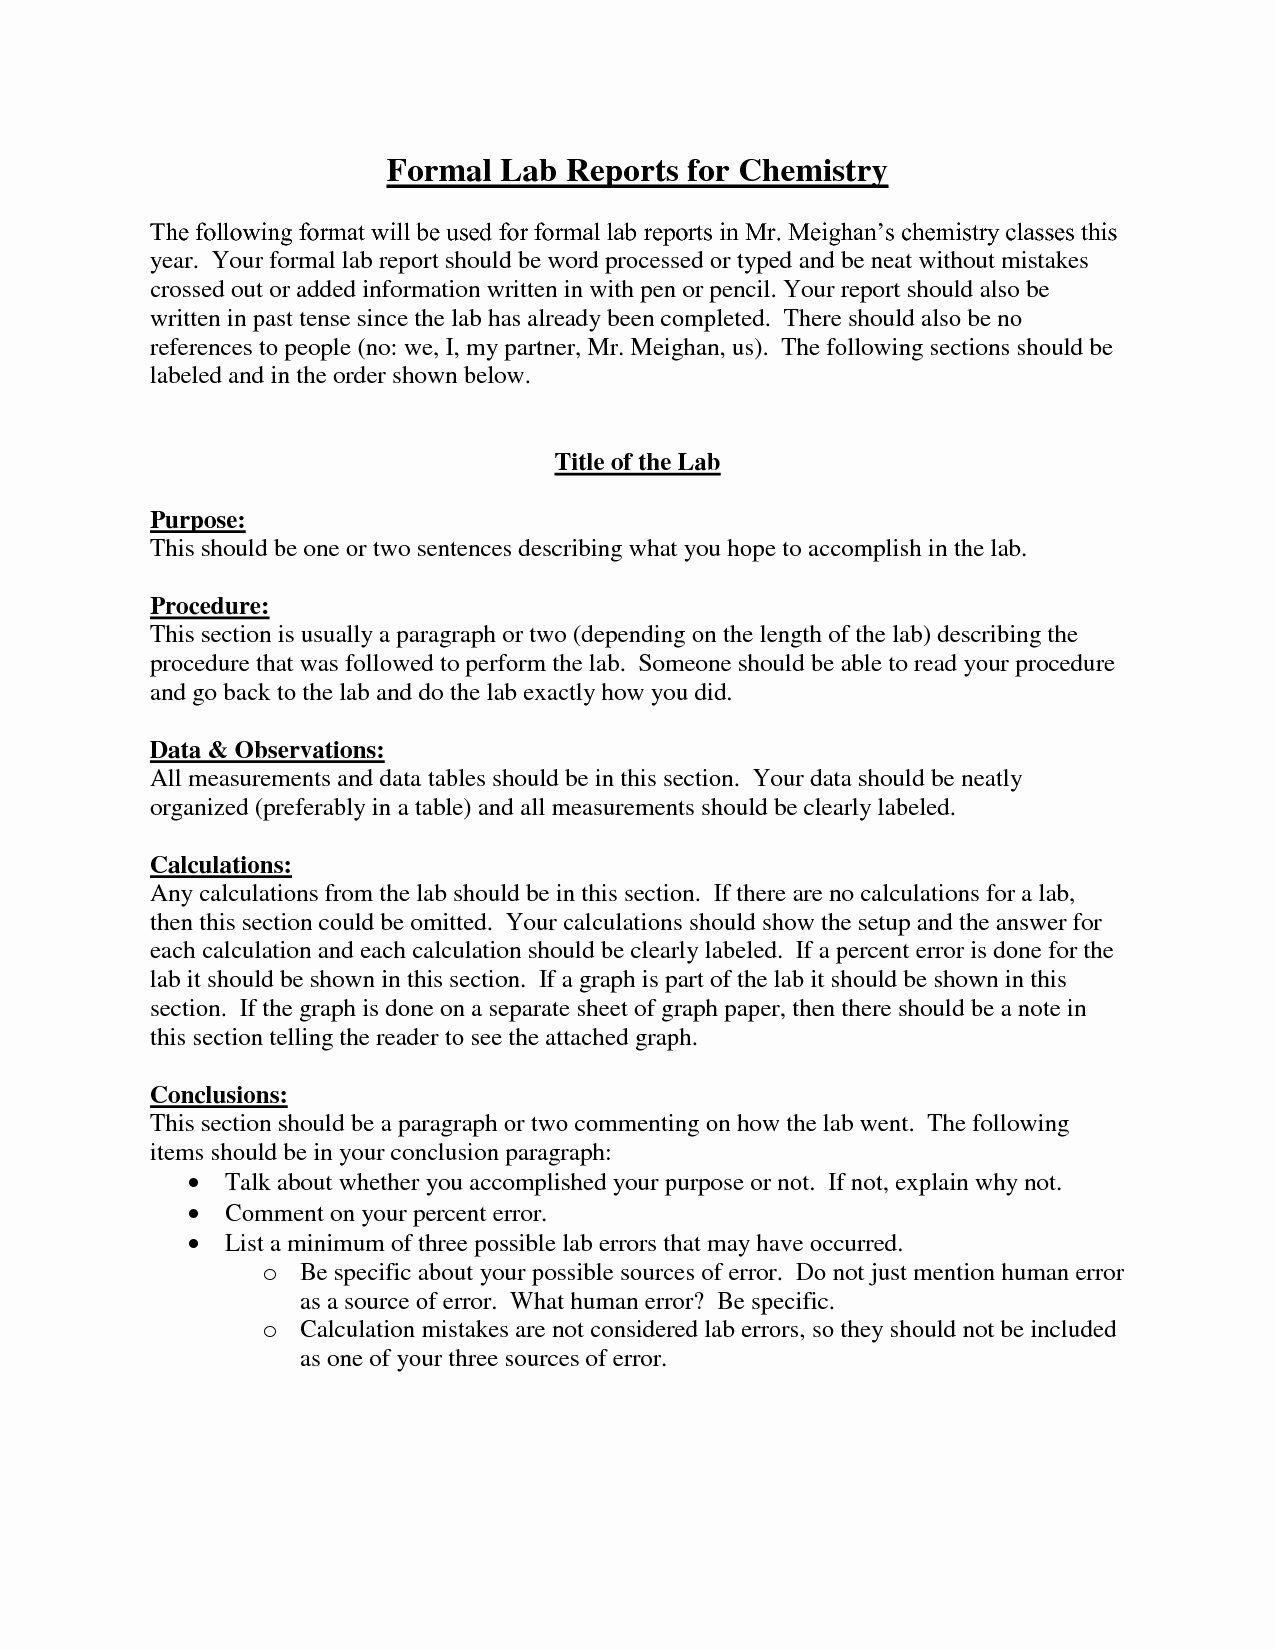 Chemistry formal Lab Report format